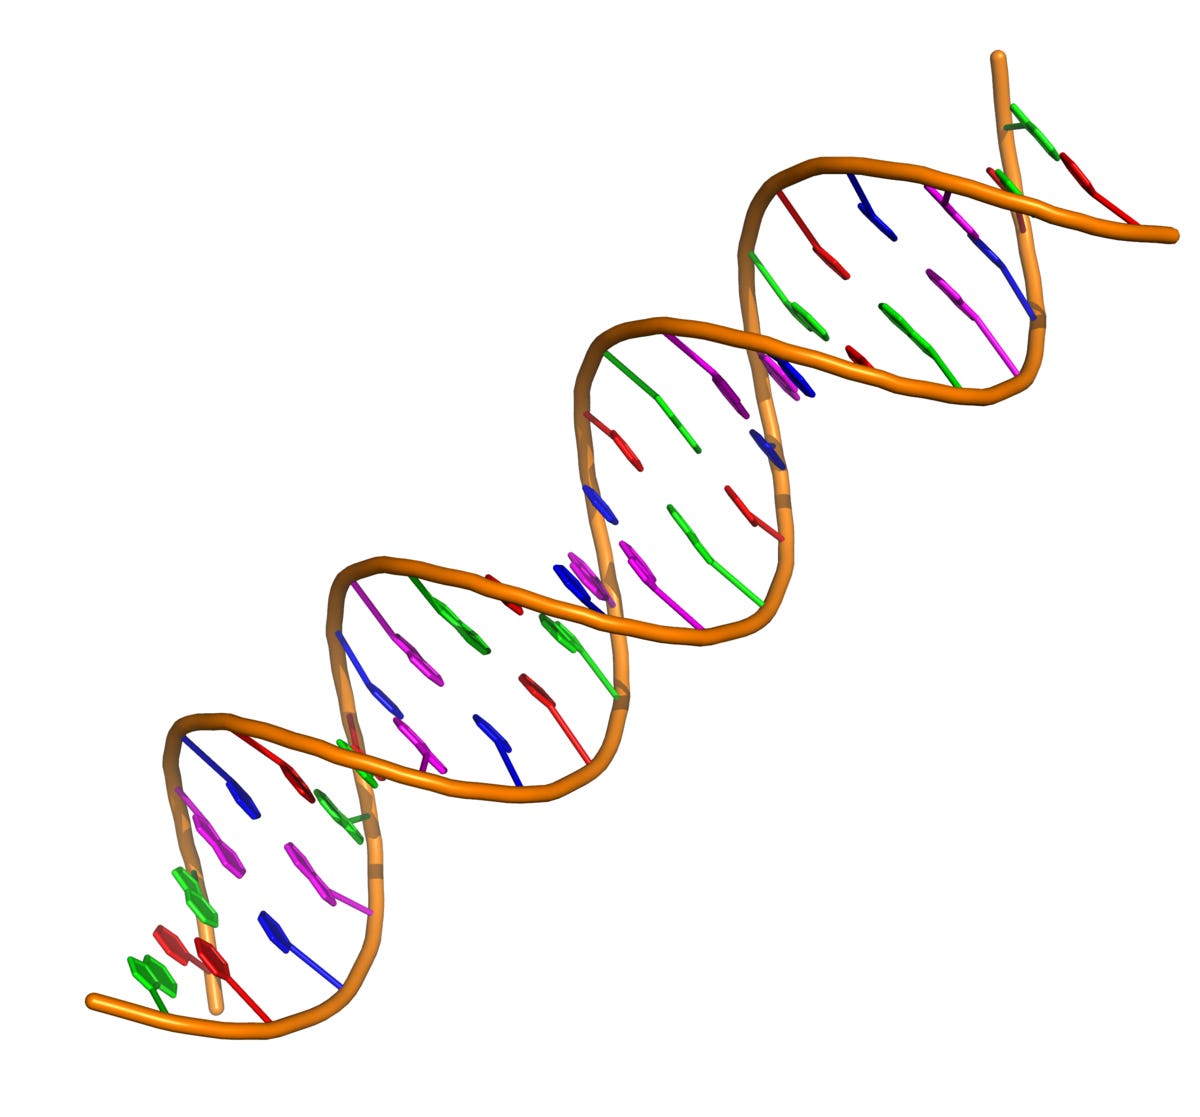 Nucleic acid double helix